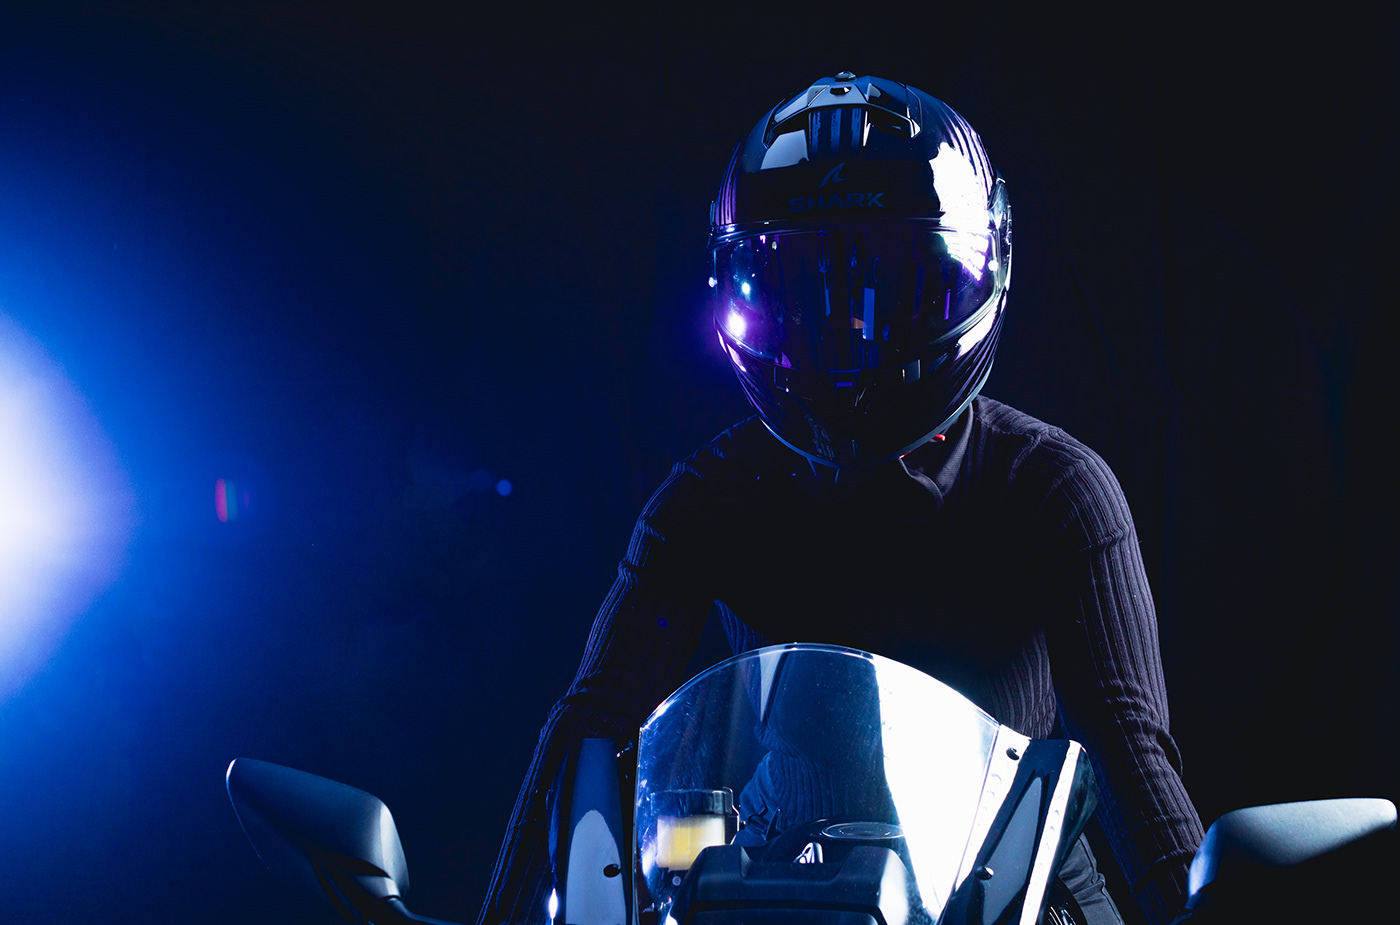 biker motorcycle yamaha Bike rider Motorsport Racing sport portrait photography photoshoot